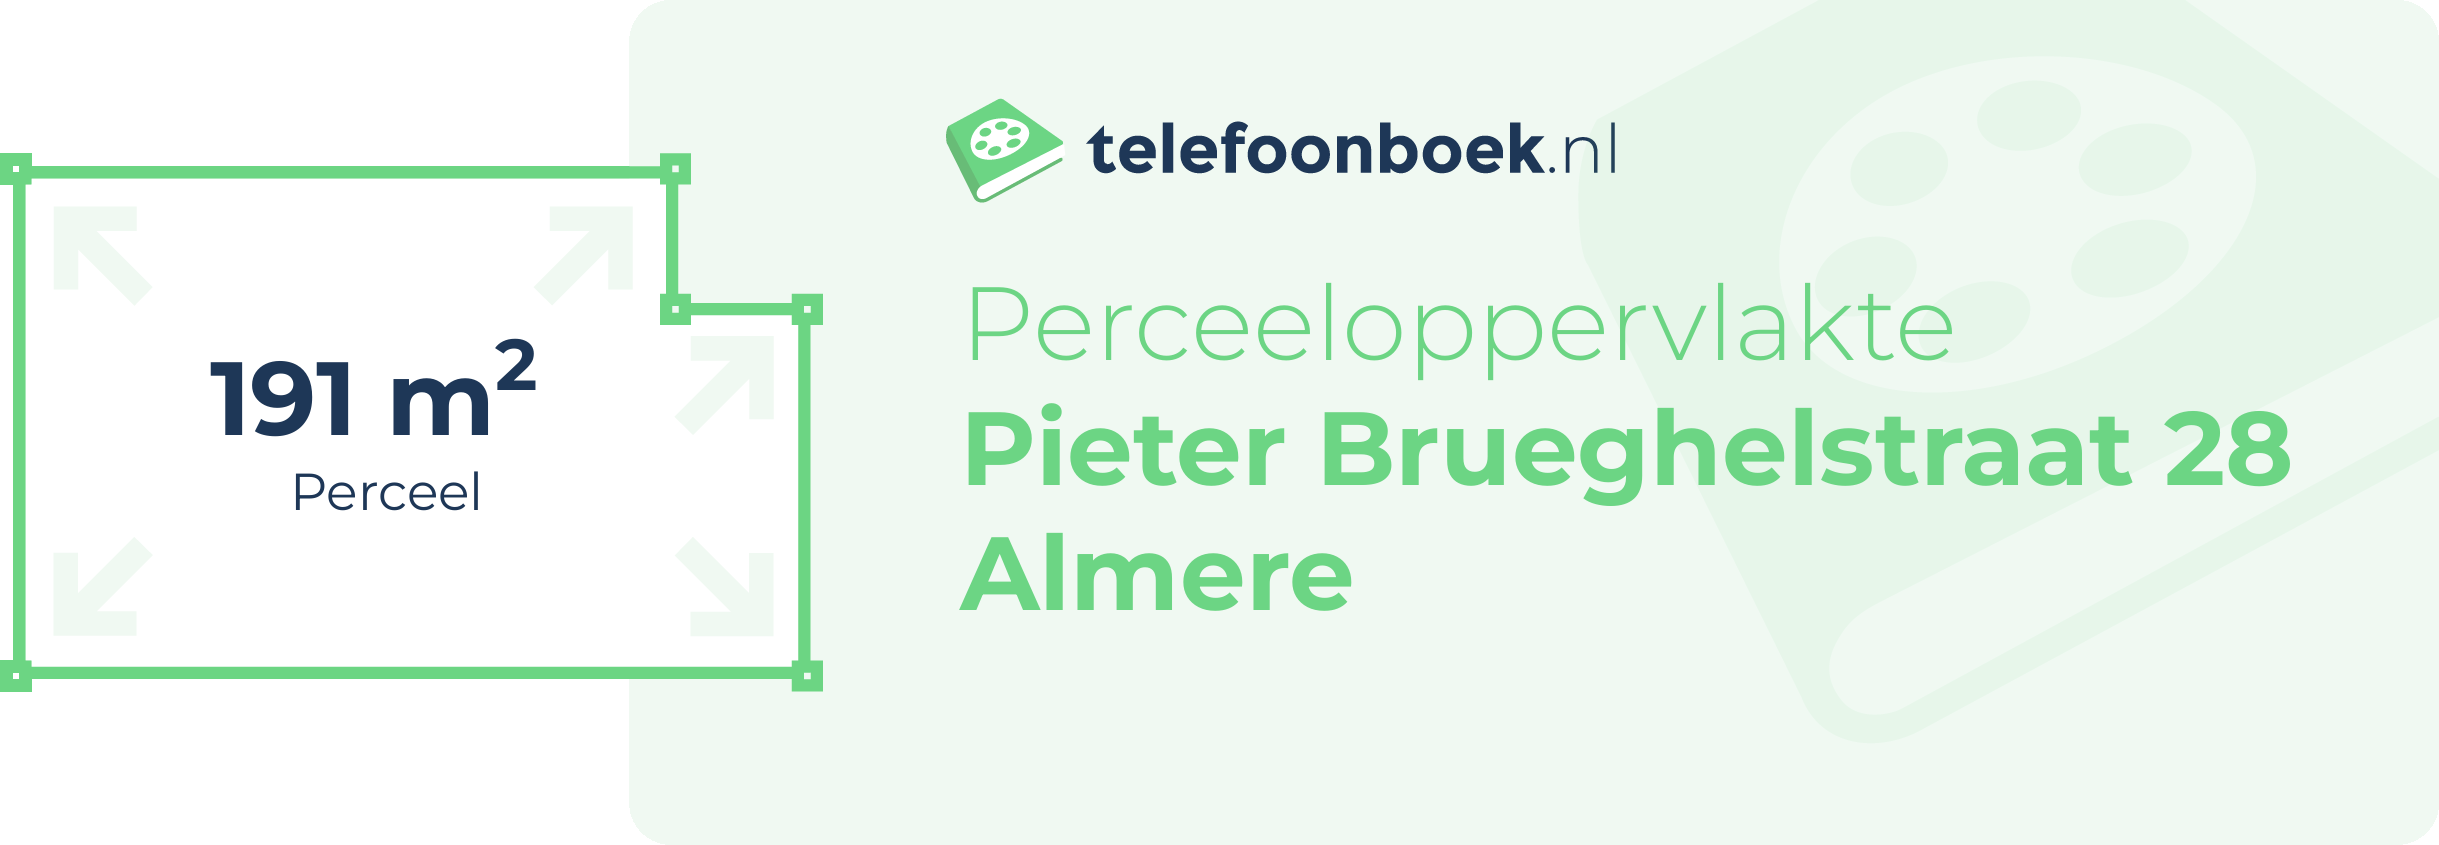 Perceeloppervlakte Pieter Brueghelstraat 28 Almere